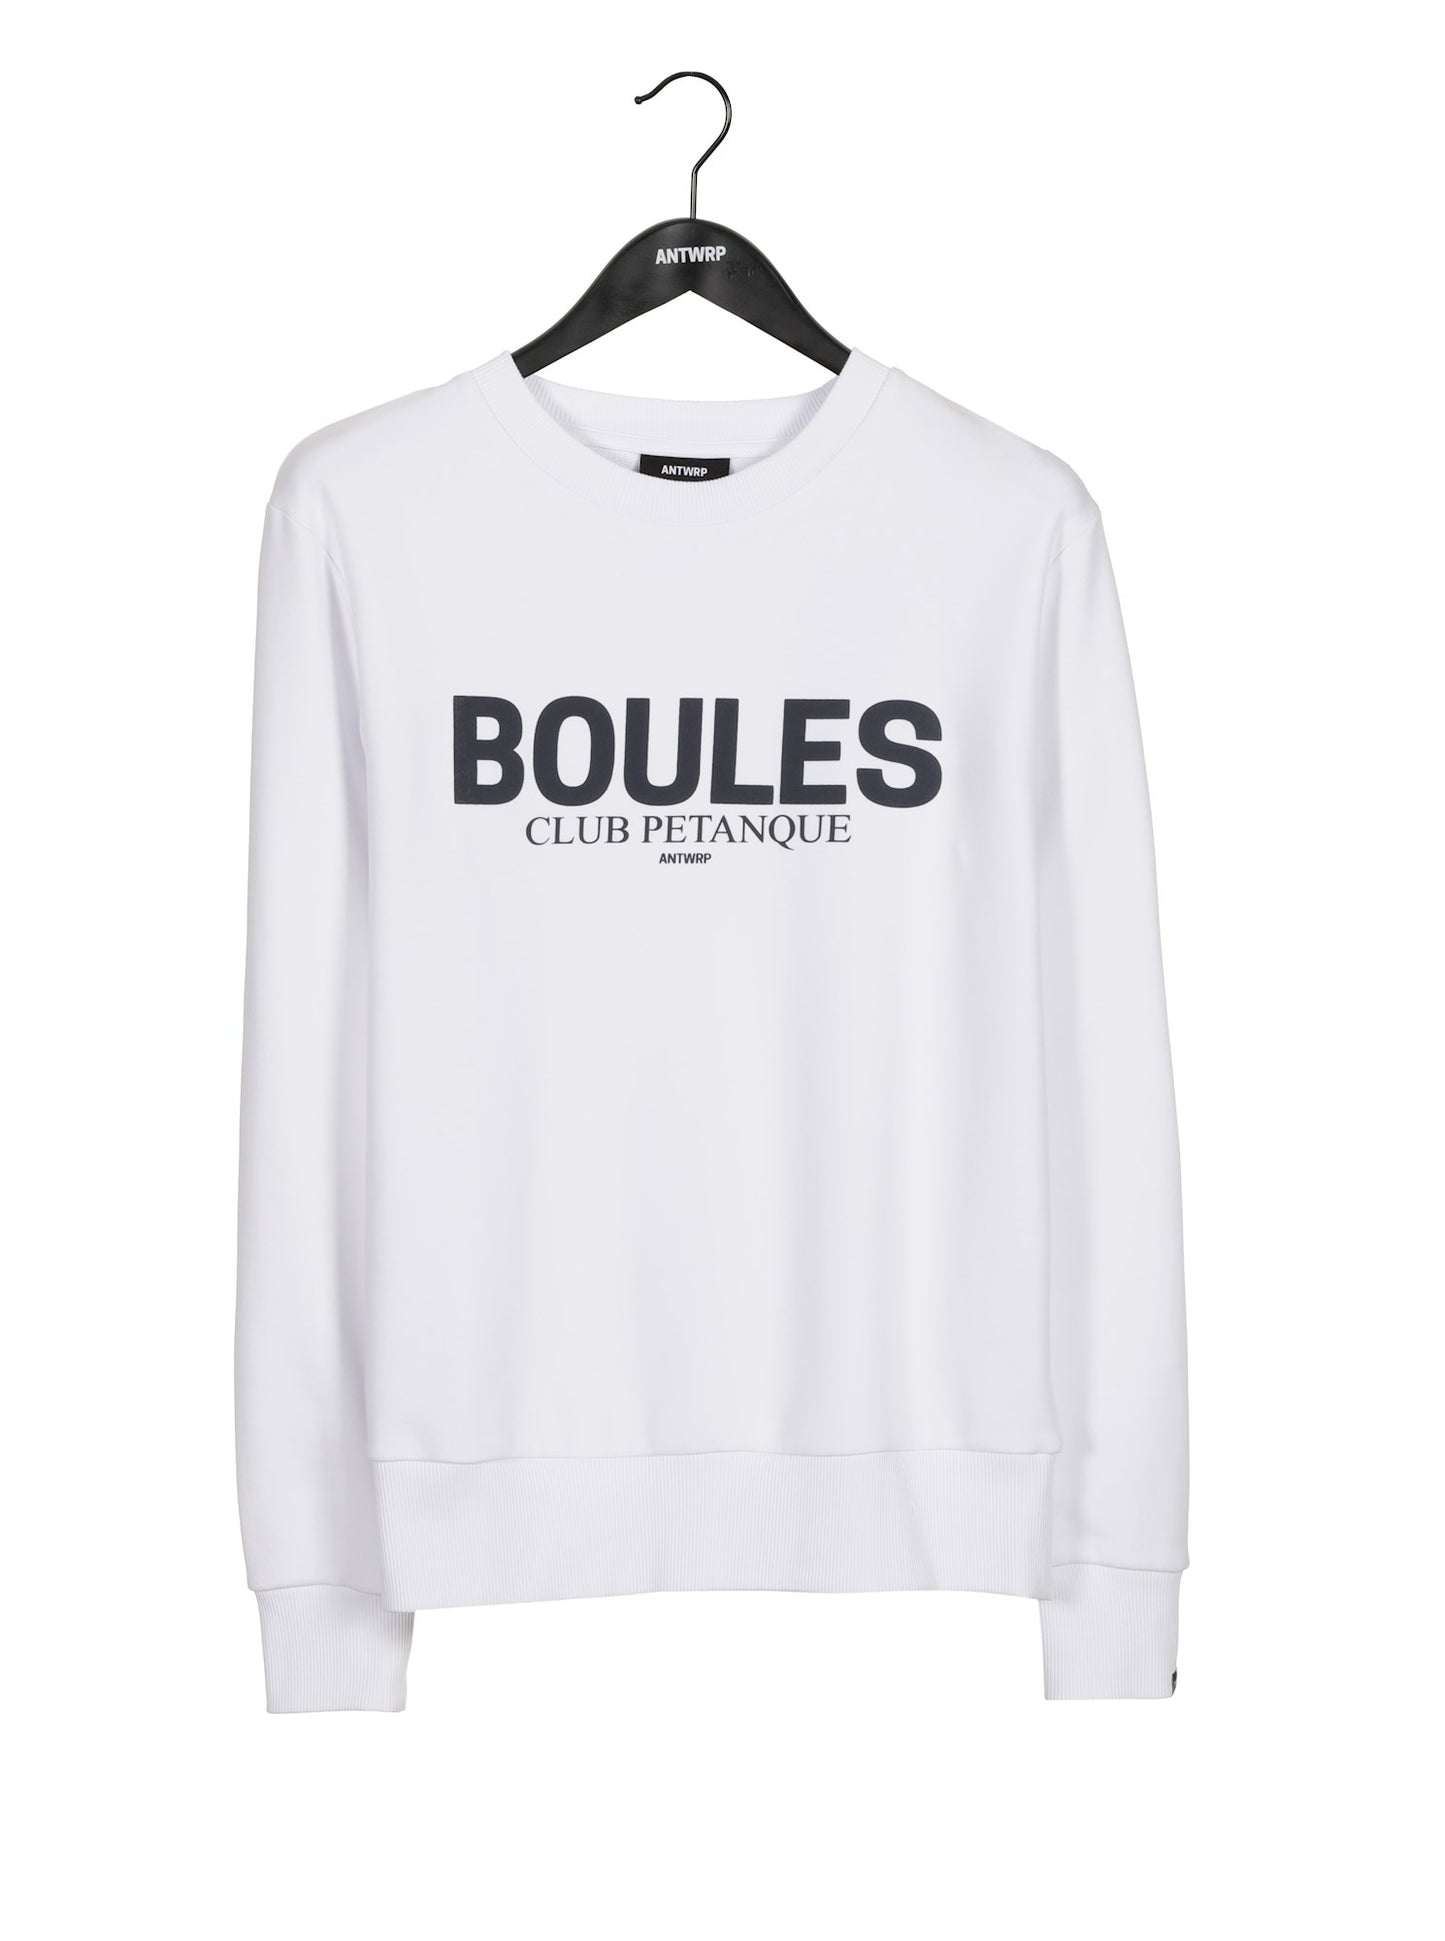 Boules sweatshirt